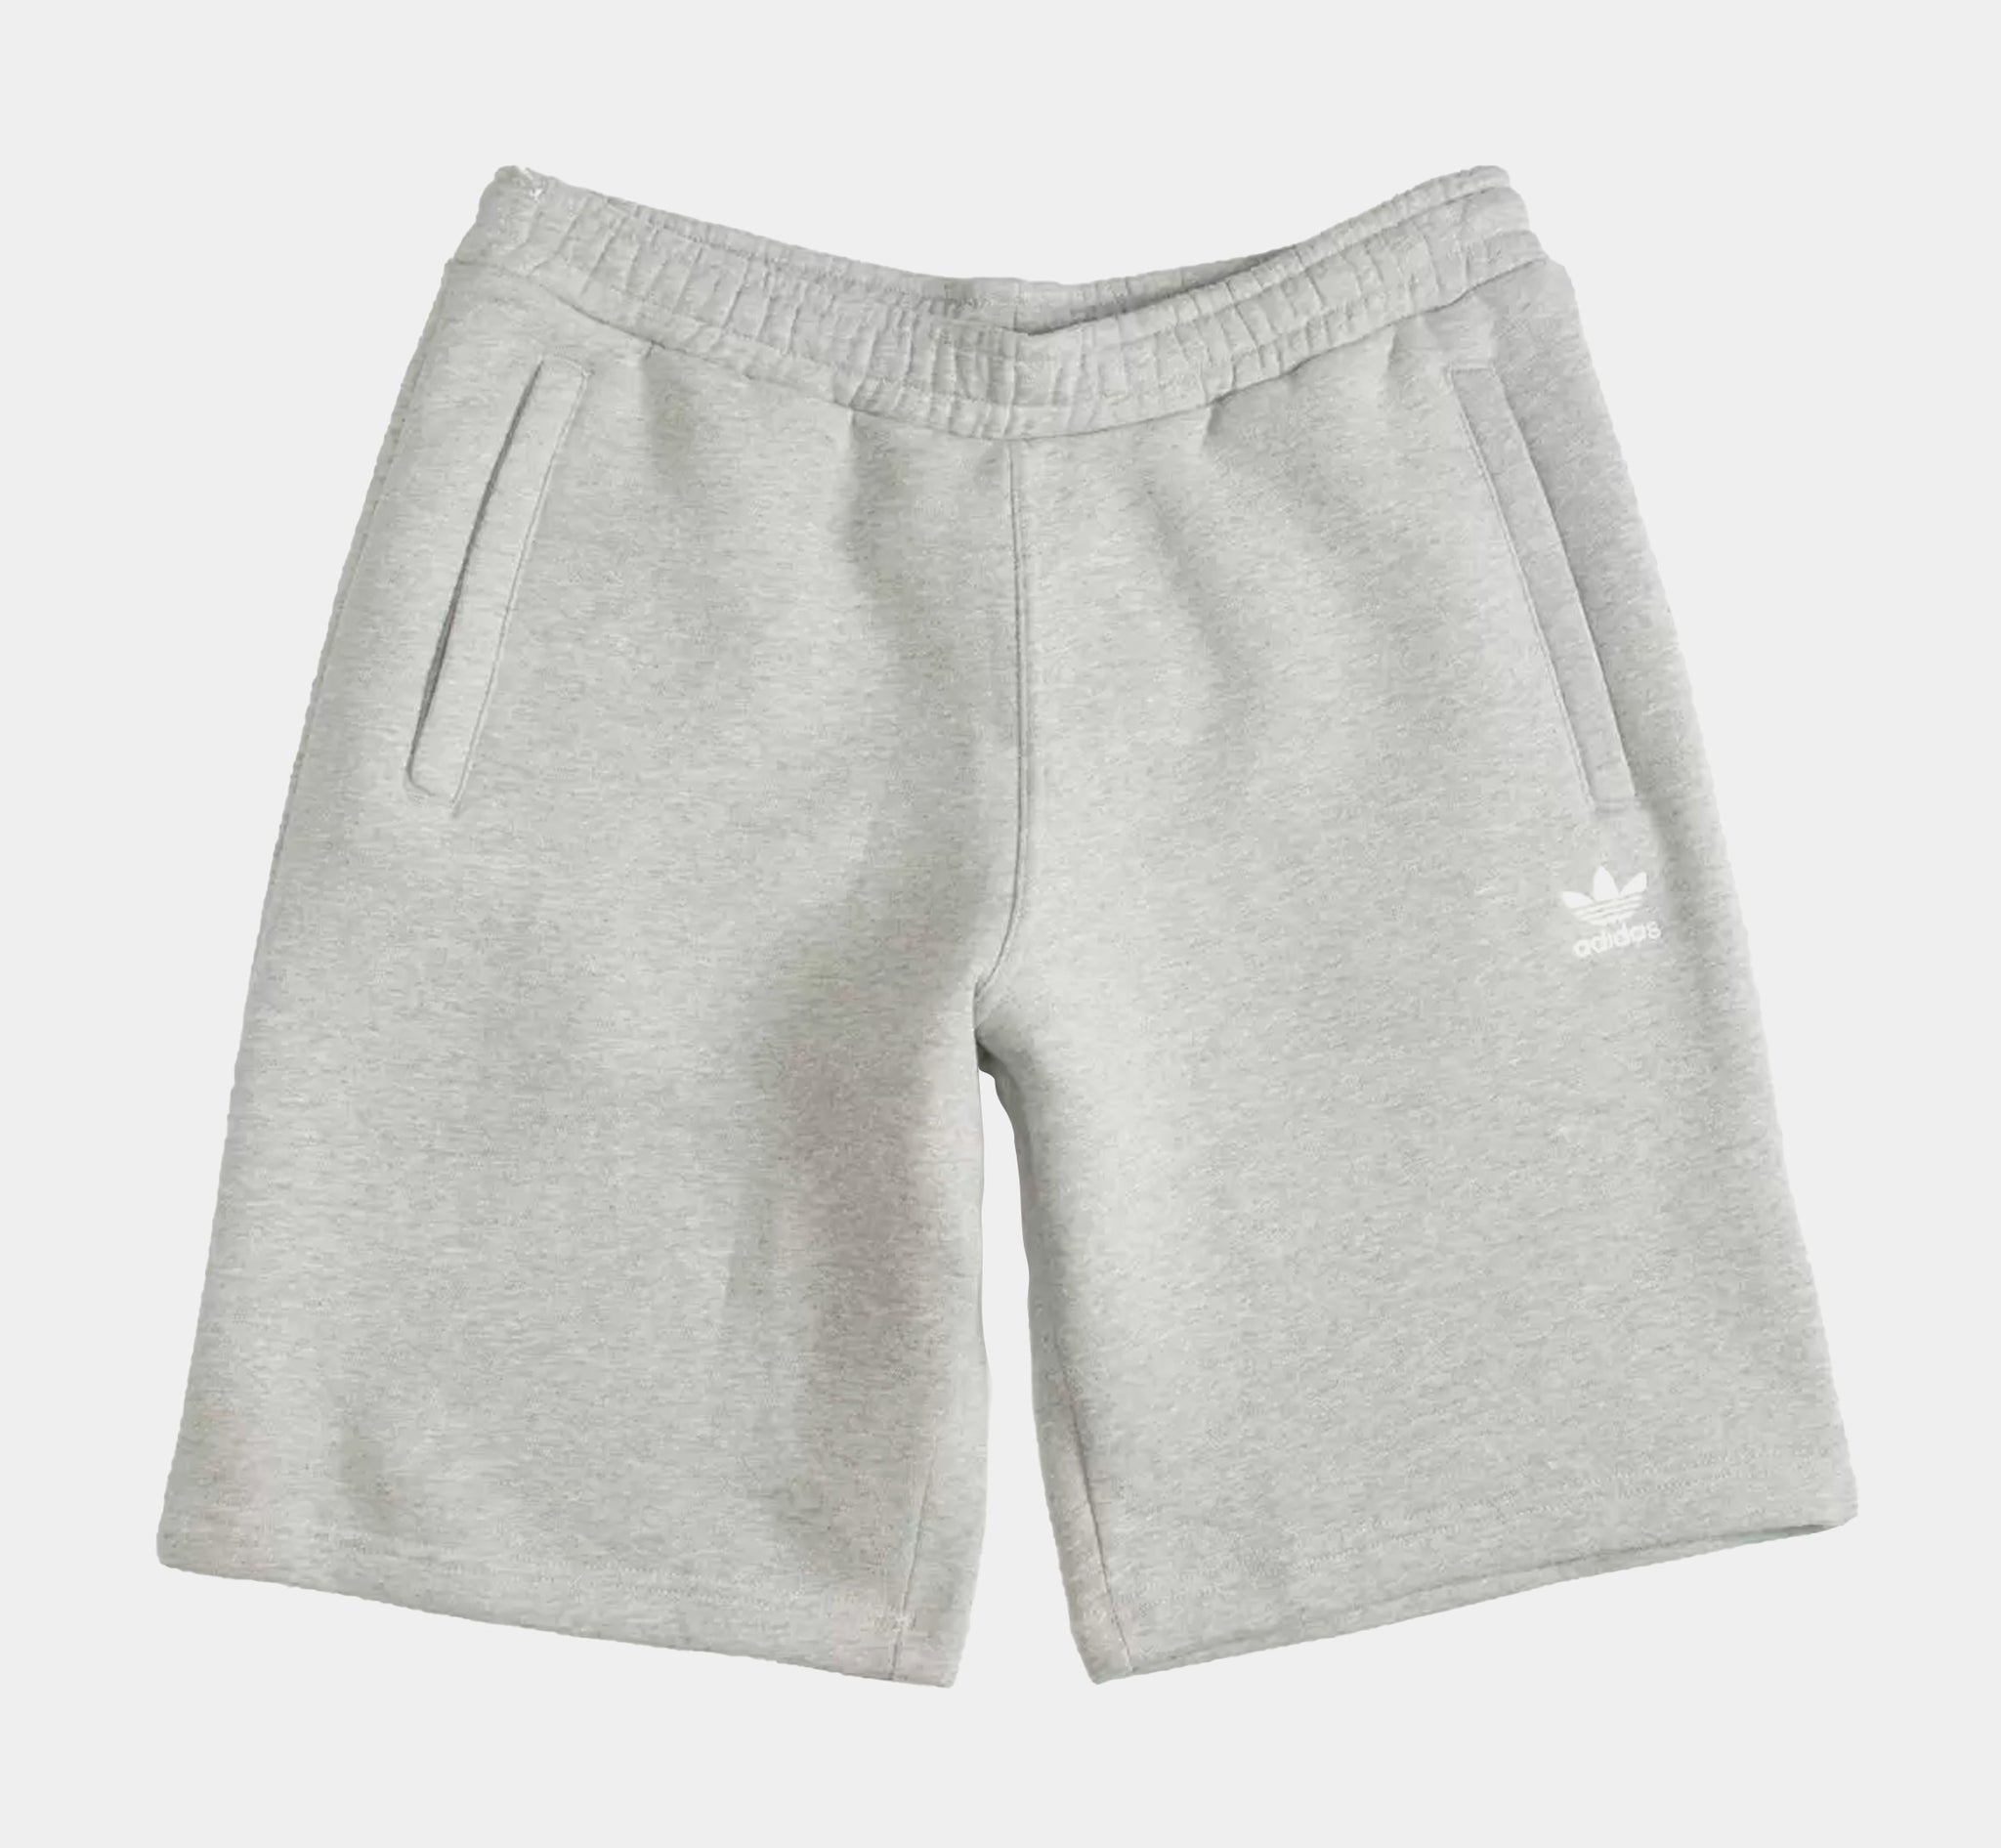 Adicolor Essentials Trefoil Shorts Mens Shorts Grey Shoe